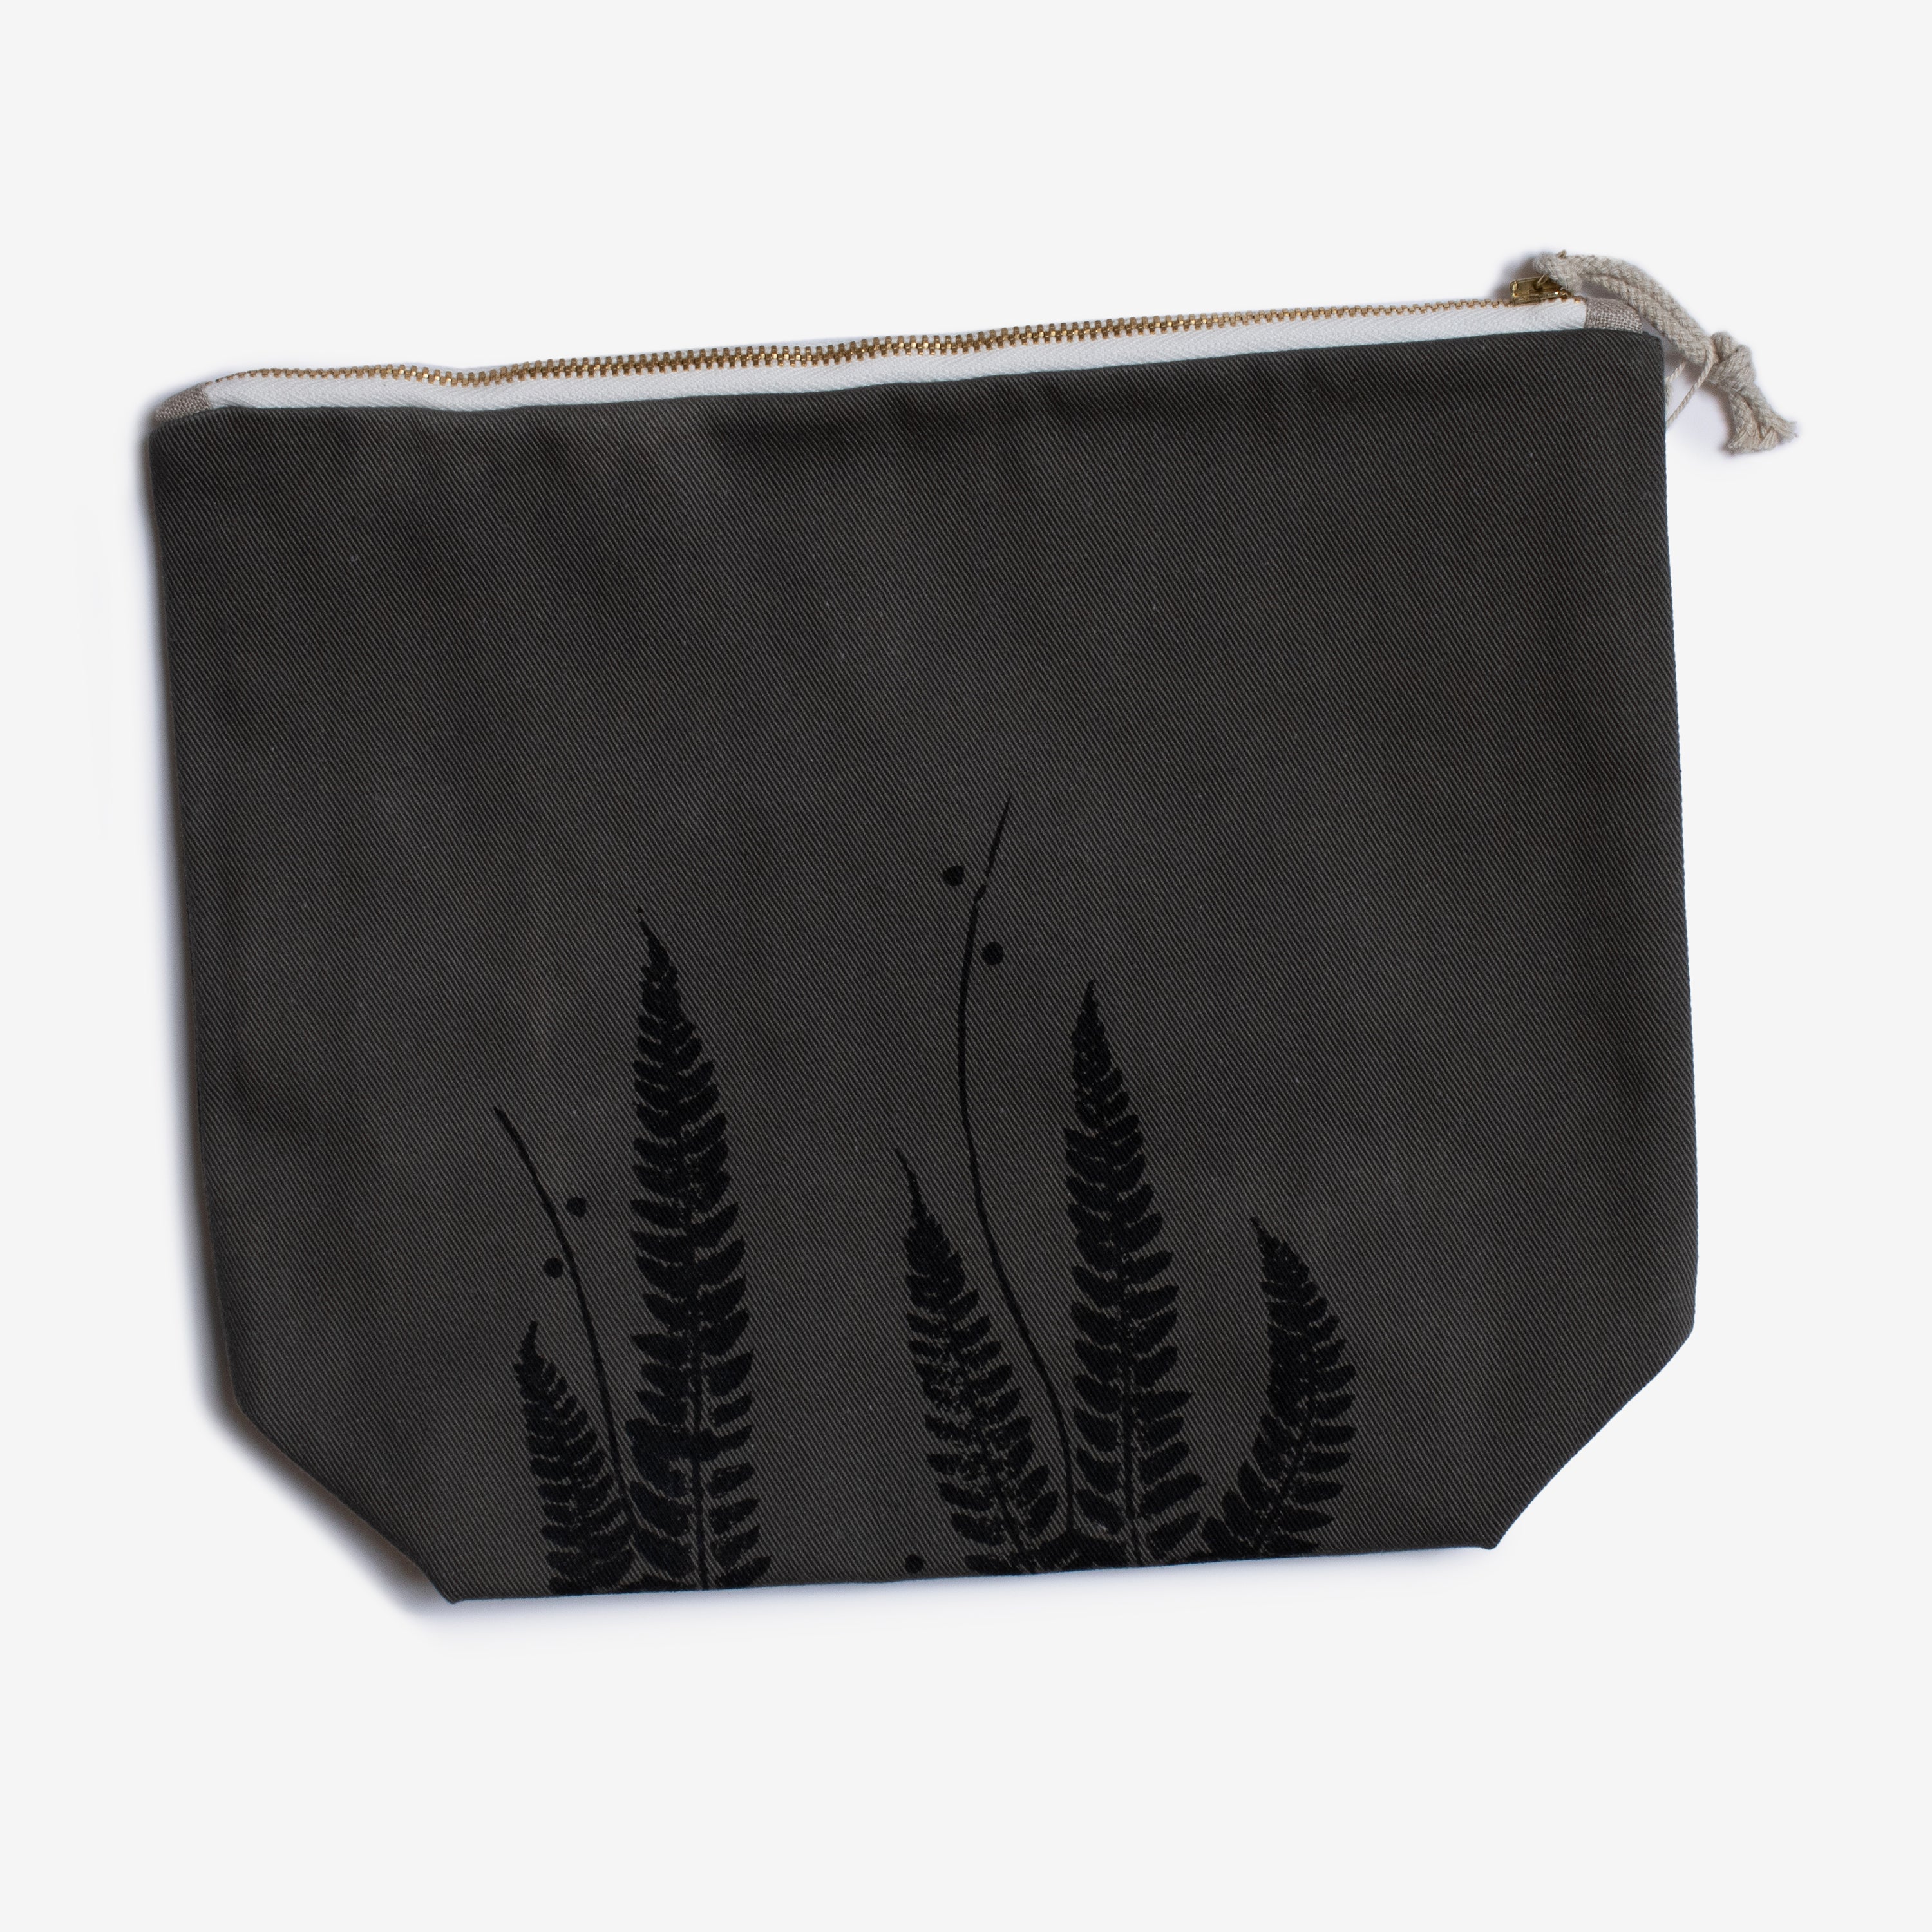 botanical zipper project bag